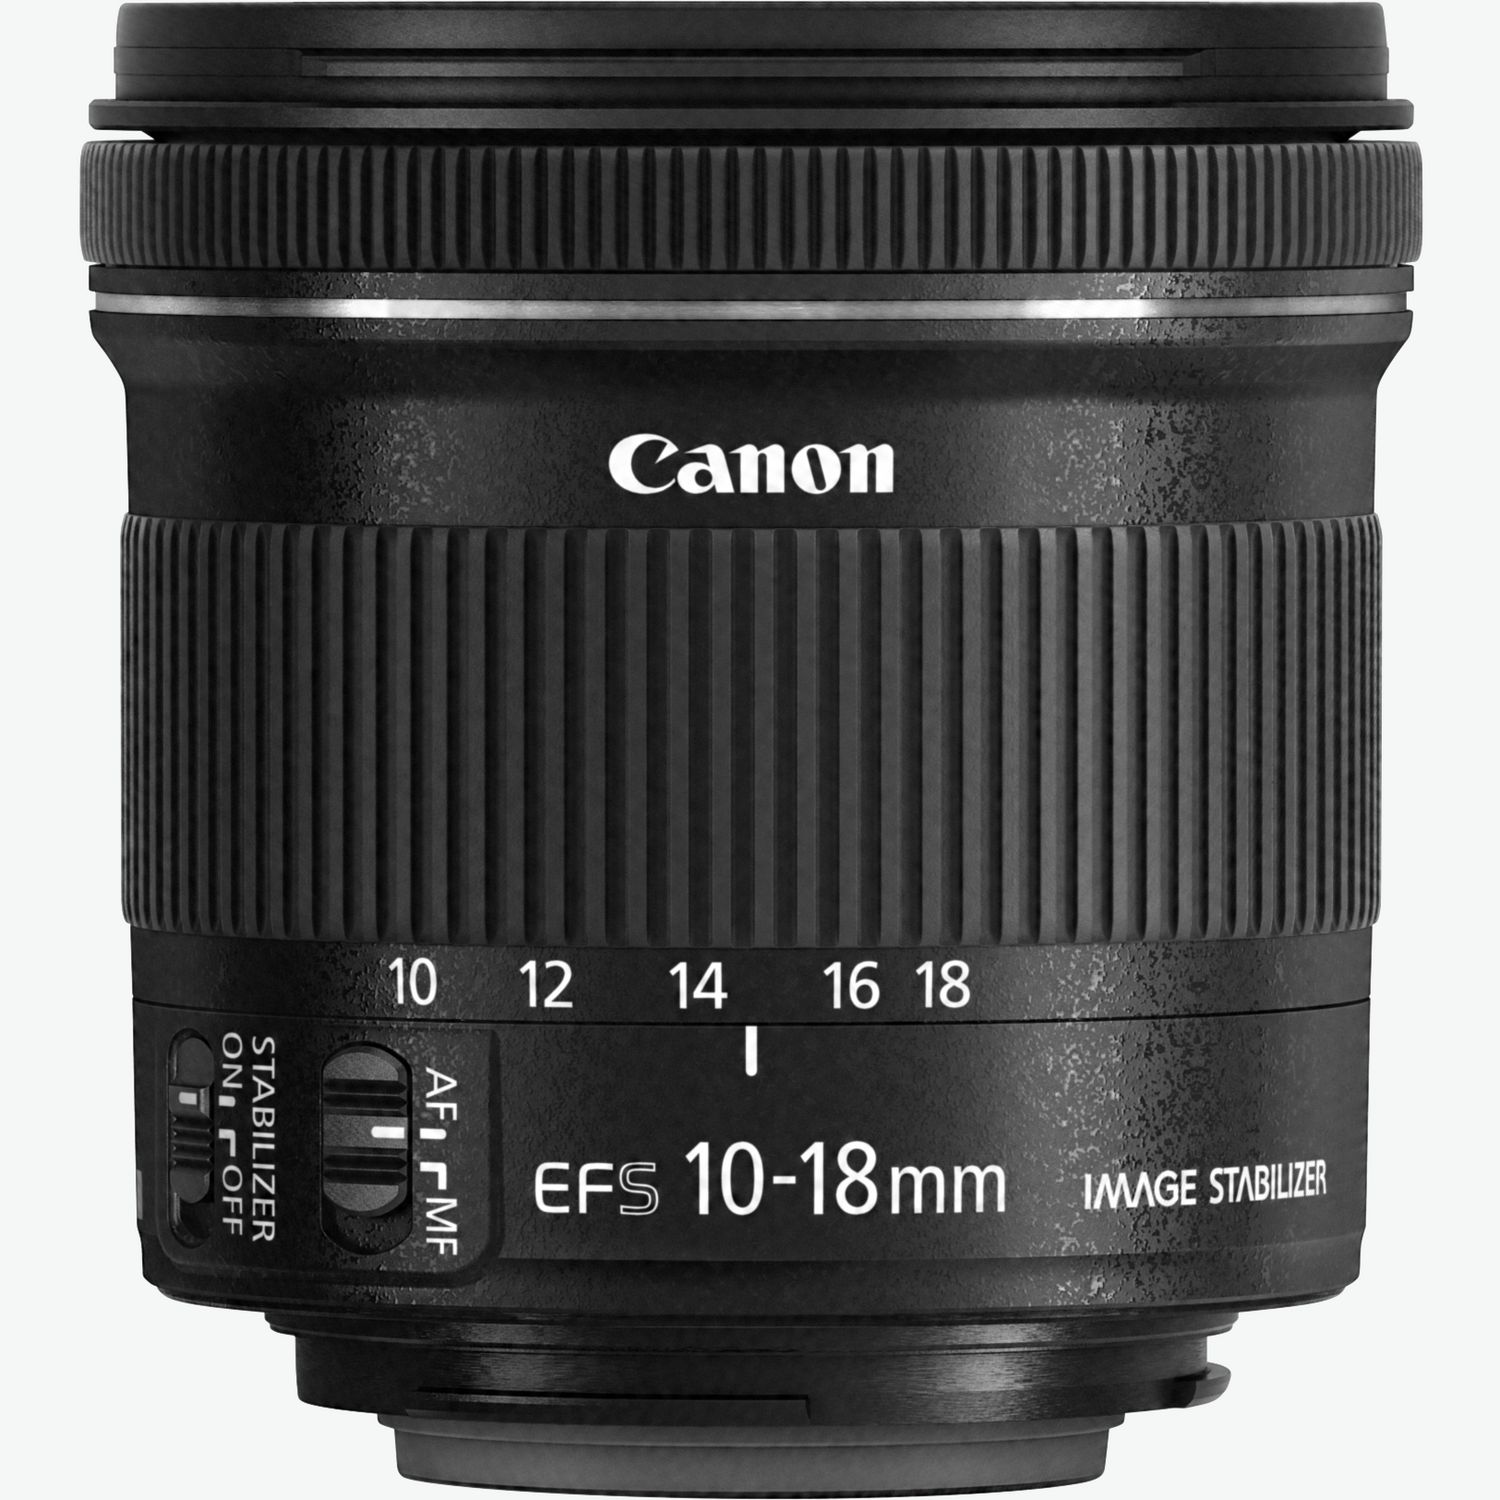 Buy Canon EOS 4000D Schwarz Canon + in — III 18-55mm WLAN-Kameras Shop EF-S Tasche Objektiv SD-Karte Schweiz + 